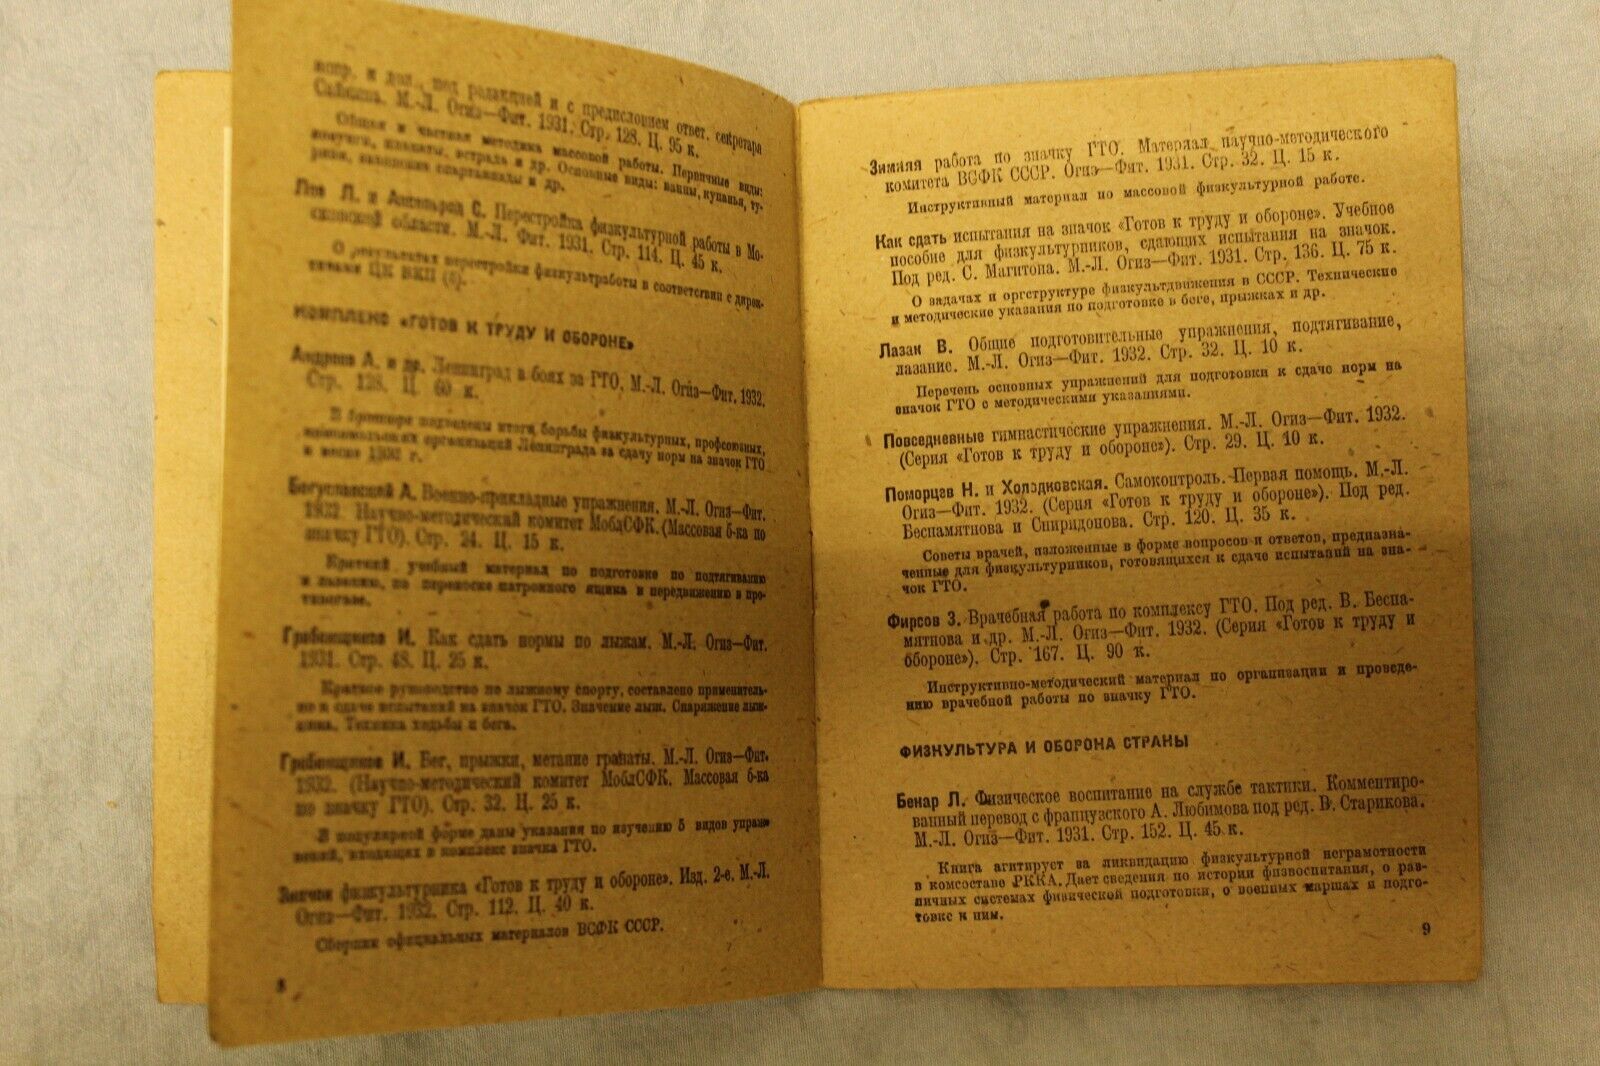 10995.Chess book Baturinsky-Karpov library, physical, tourism, chess&checkers, 1932